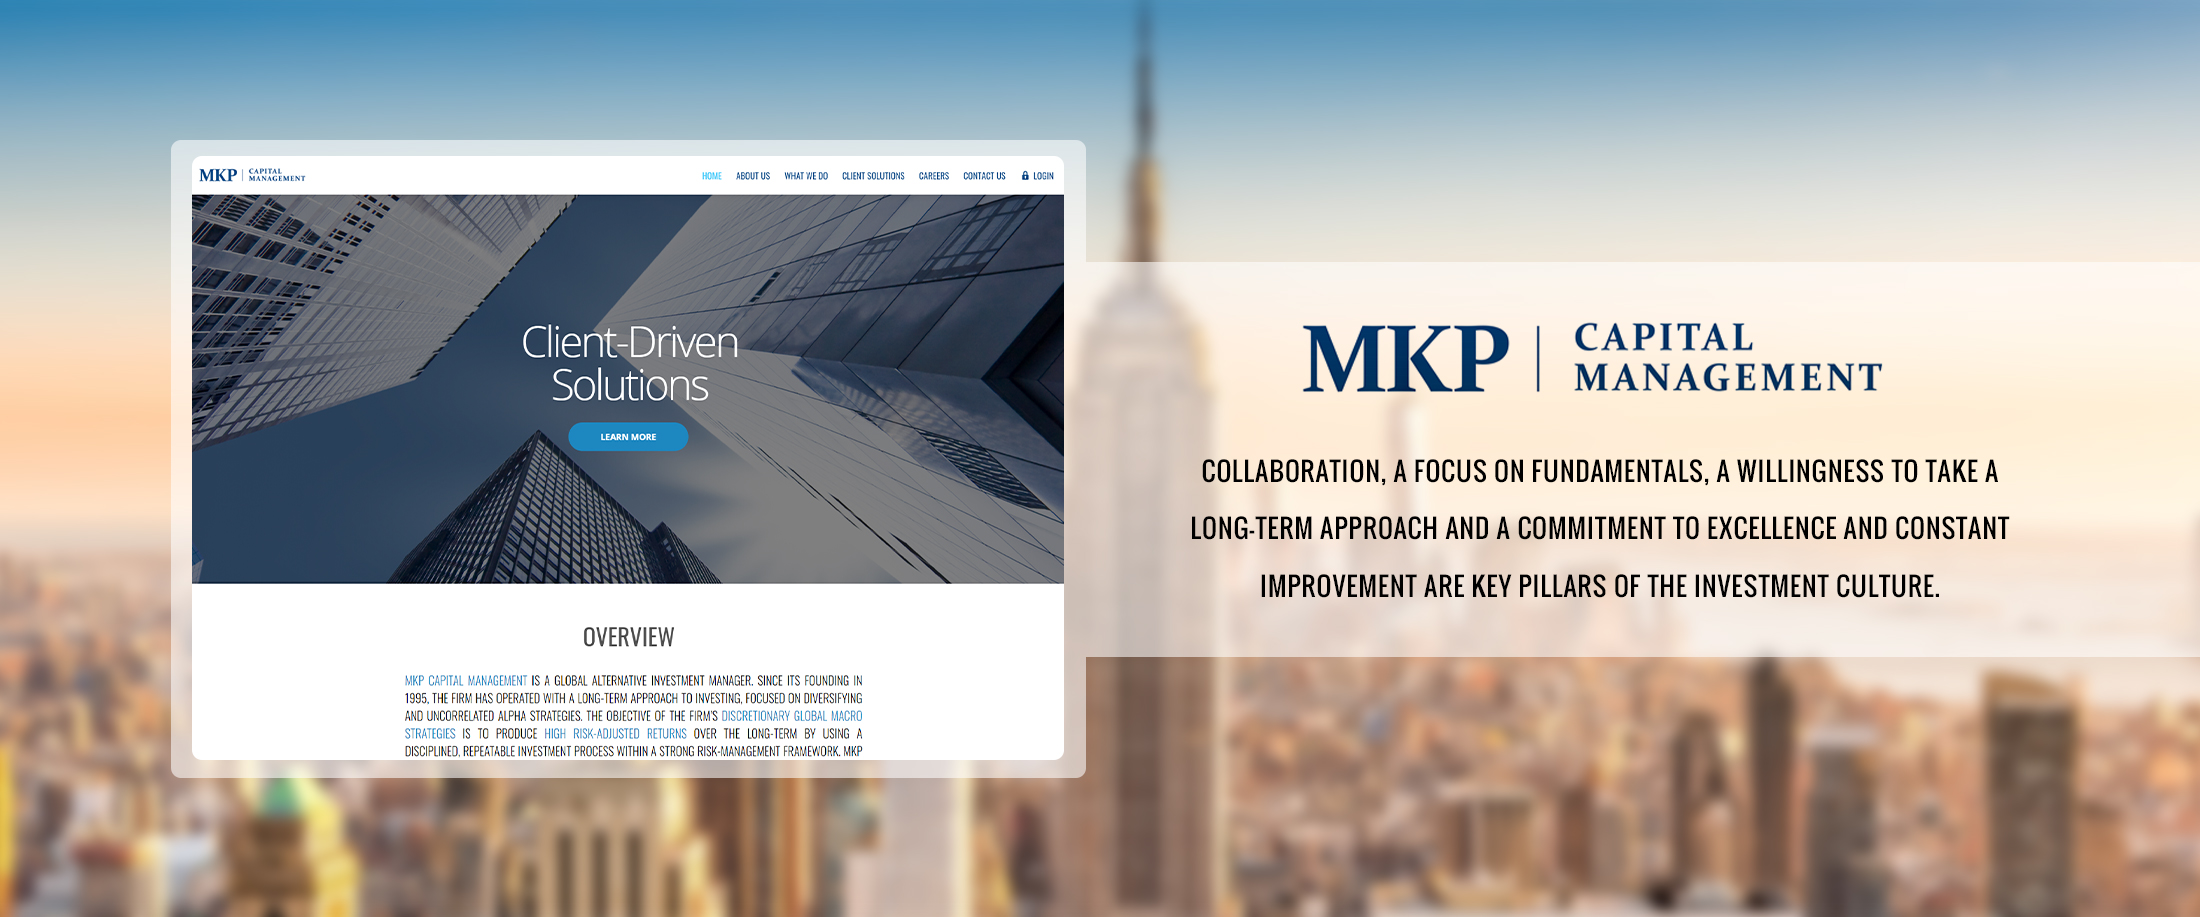 MKP-Capital-Management-banner